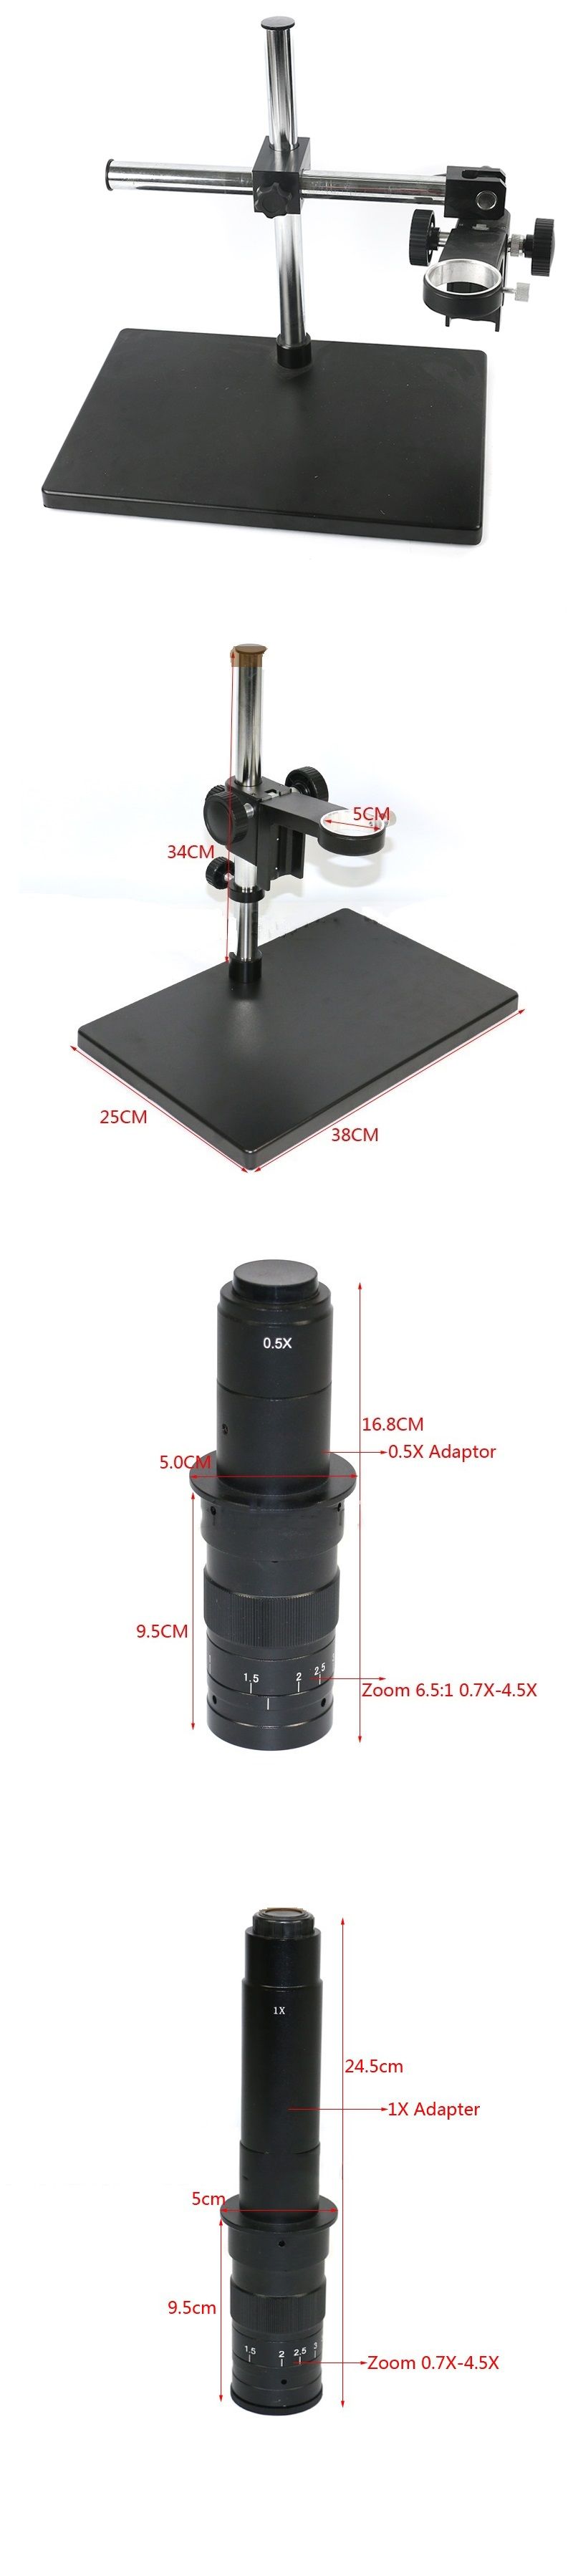 FHD-1080P-60FPS-2K-HDMI-USB-Digital-Industry-Video-Microscope-Camera-Set-System-180X-300X-C-MOUNT-Le-1526292